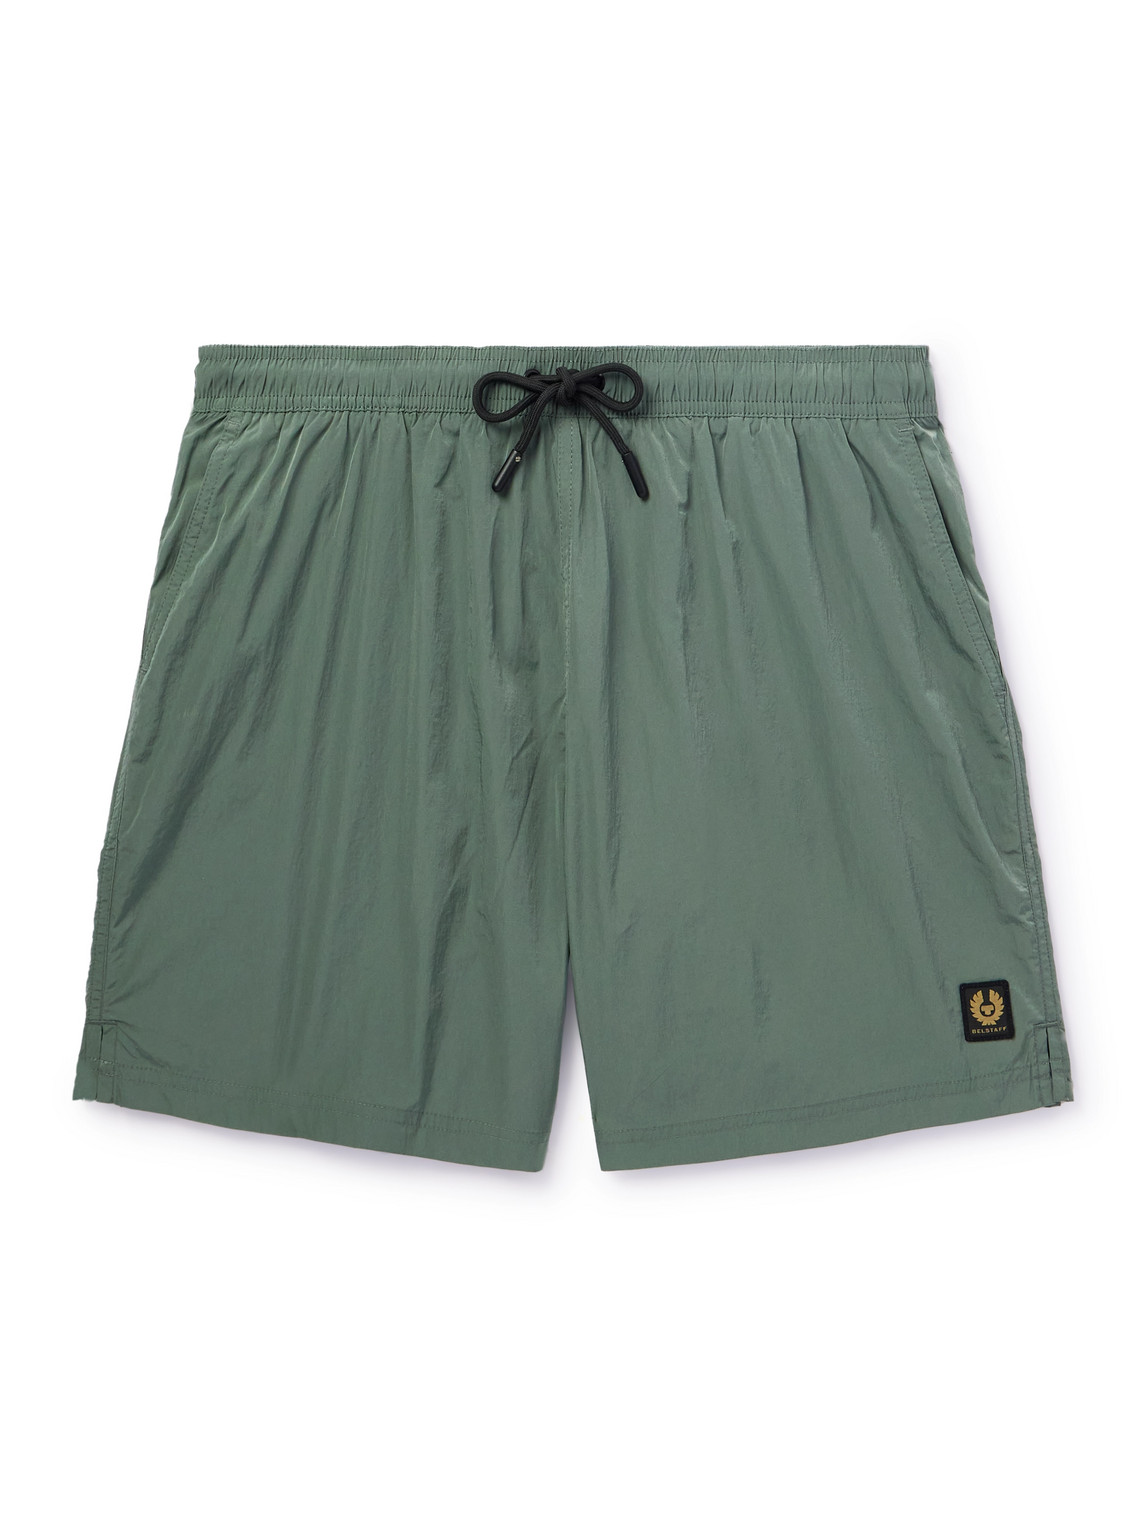 Belstaff - Clipper Straight-Leg Mid-Length Swim Shorts - Men - Green - S von Belstaff